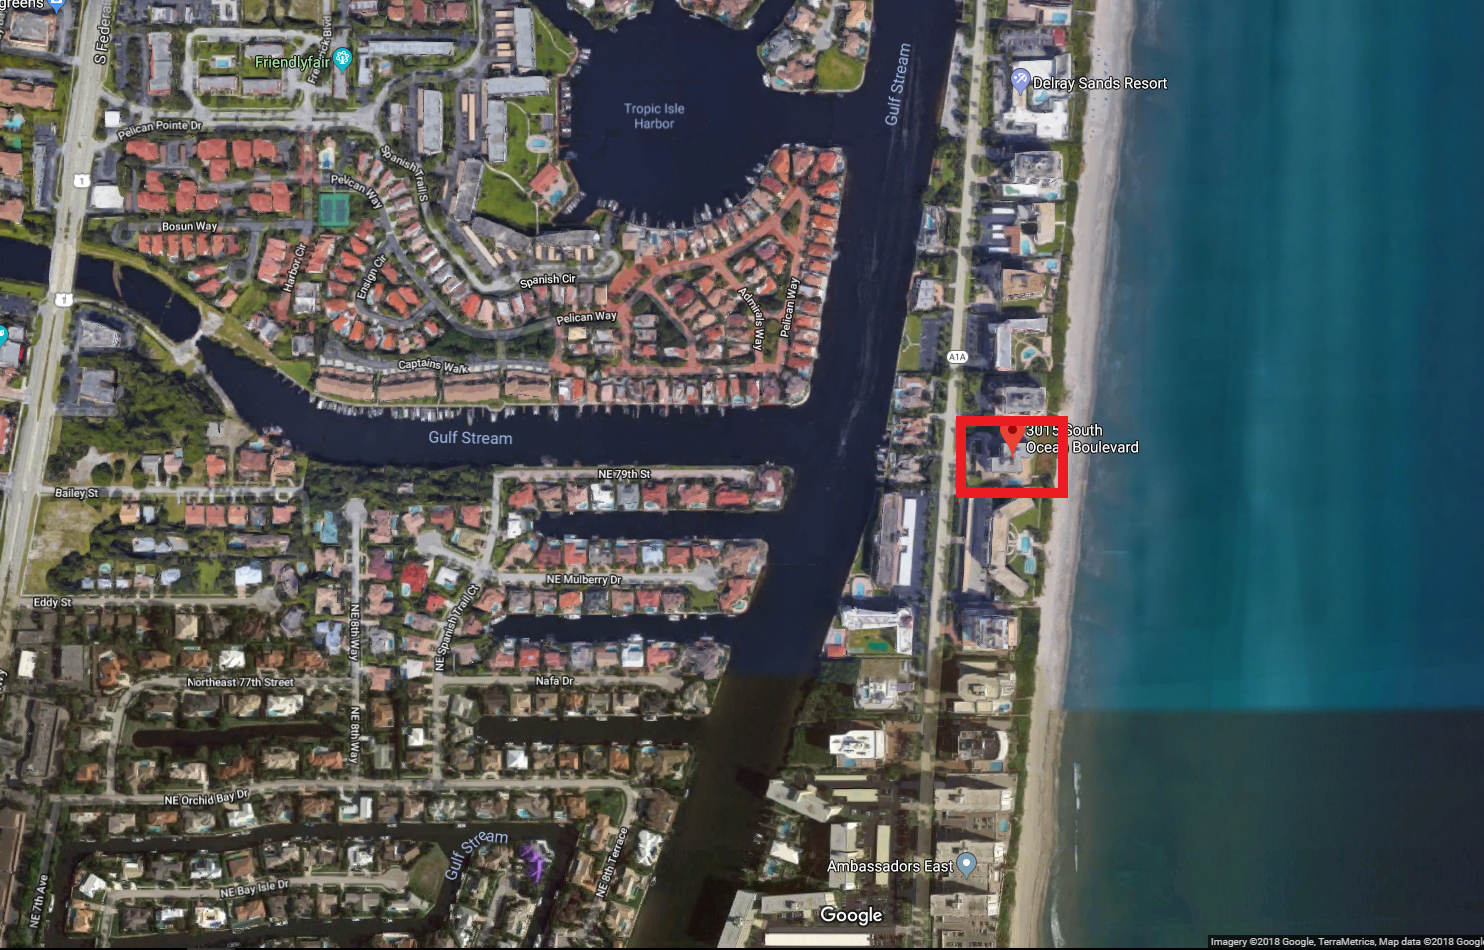 Ocean Dunes 3015 S Ocean Blvd Highland Beach, FL 33487 luxury condos for sale aerial view